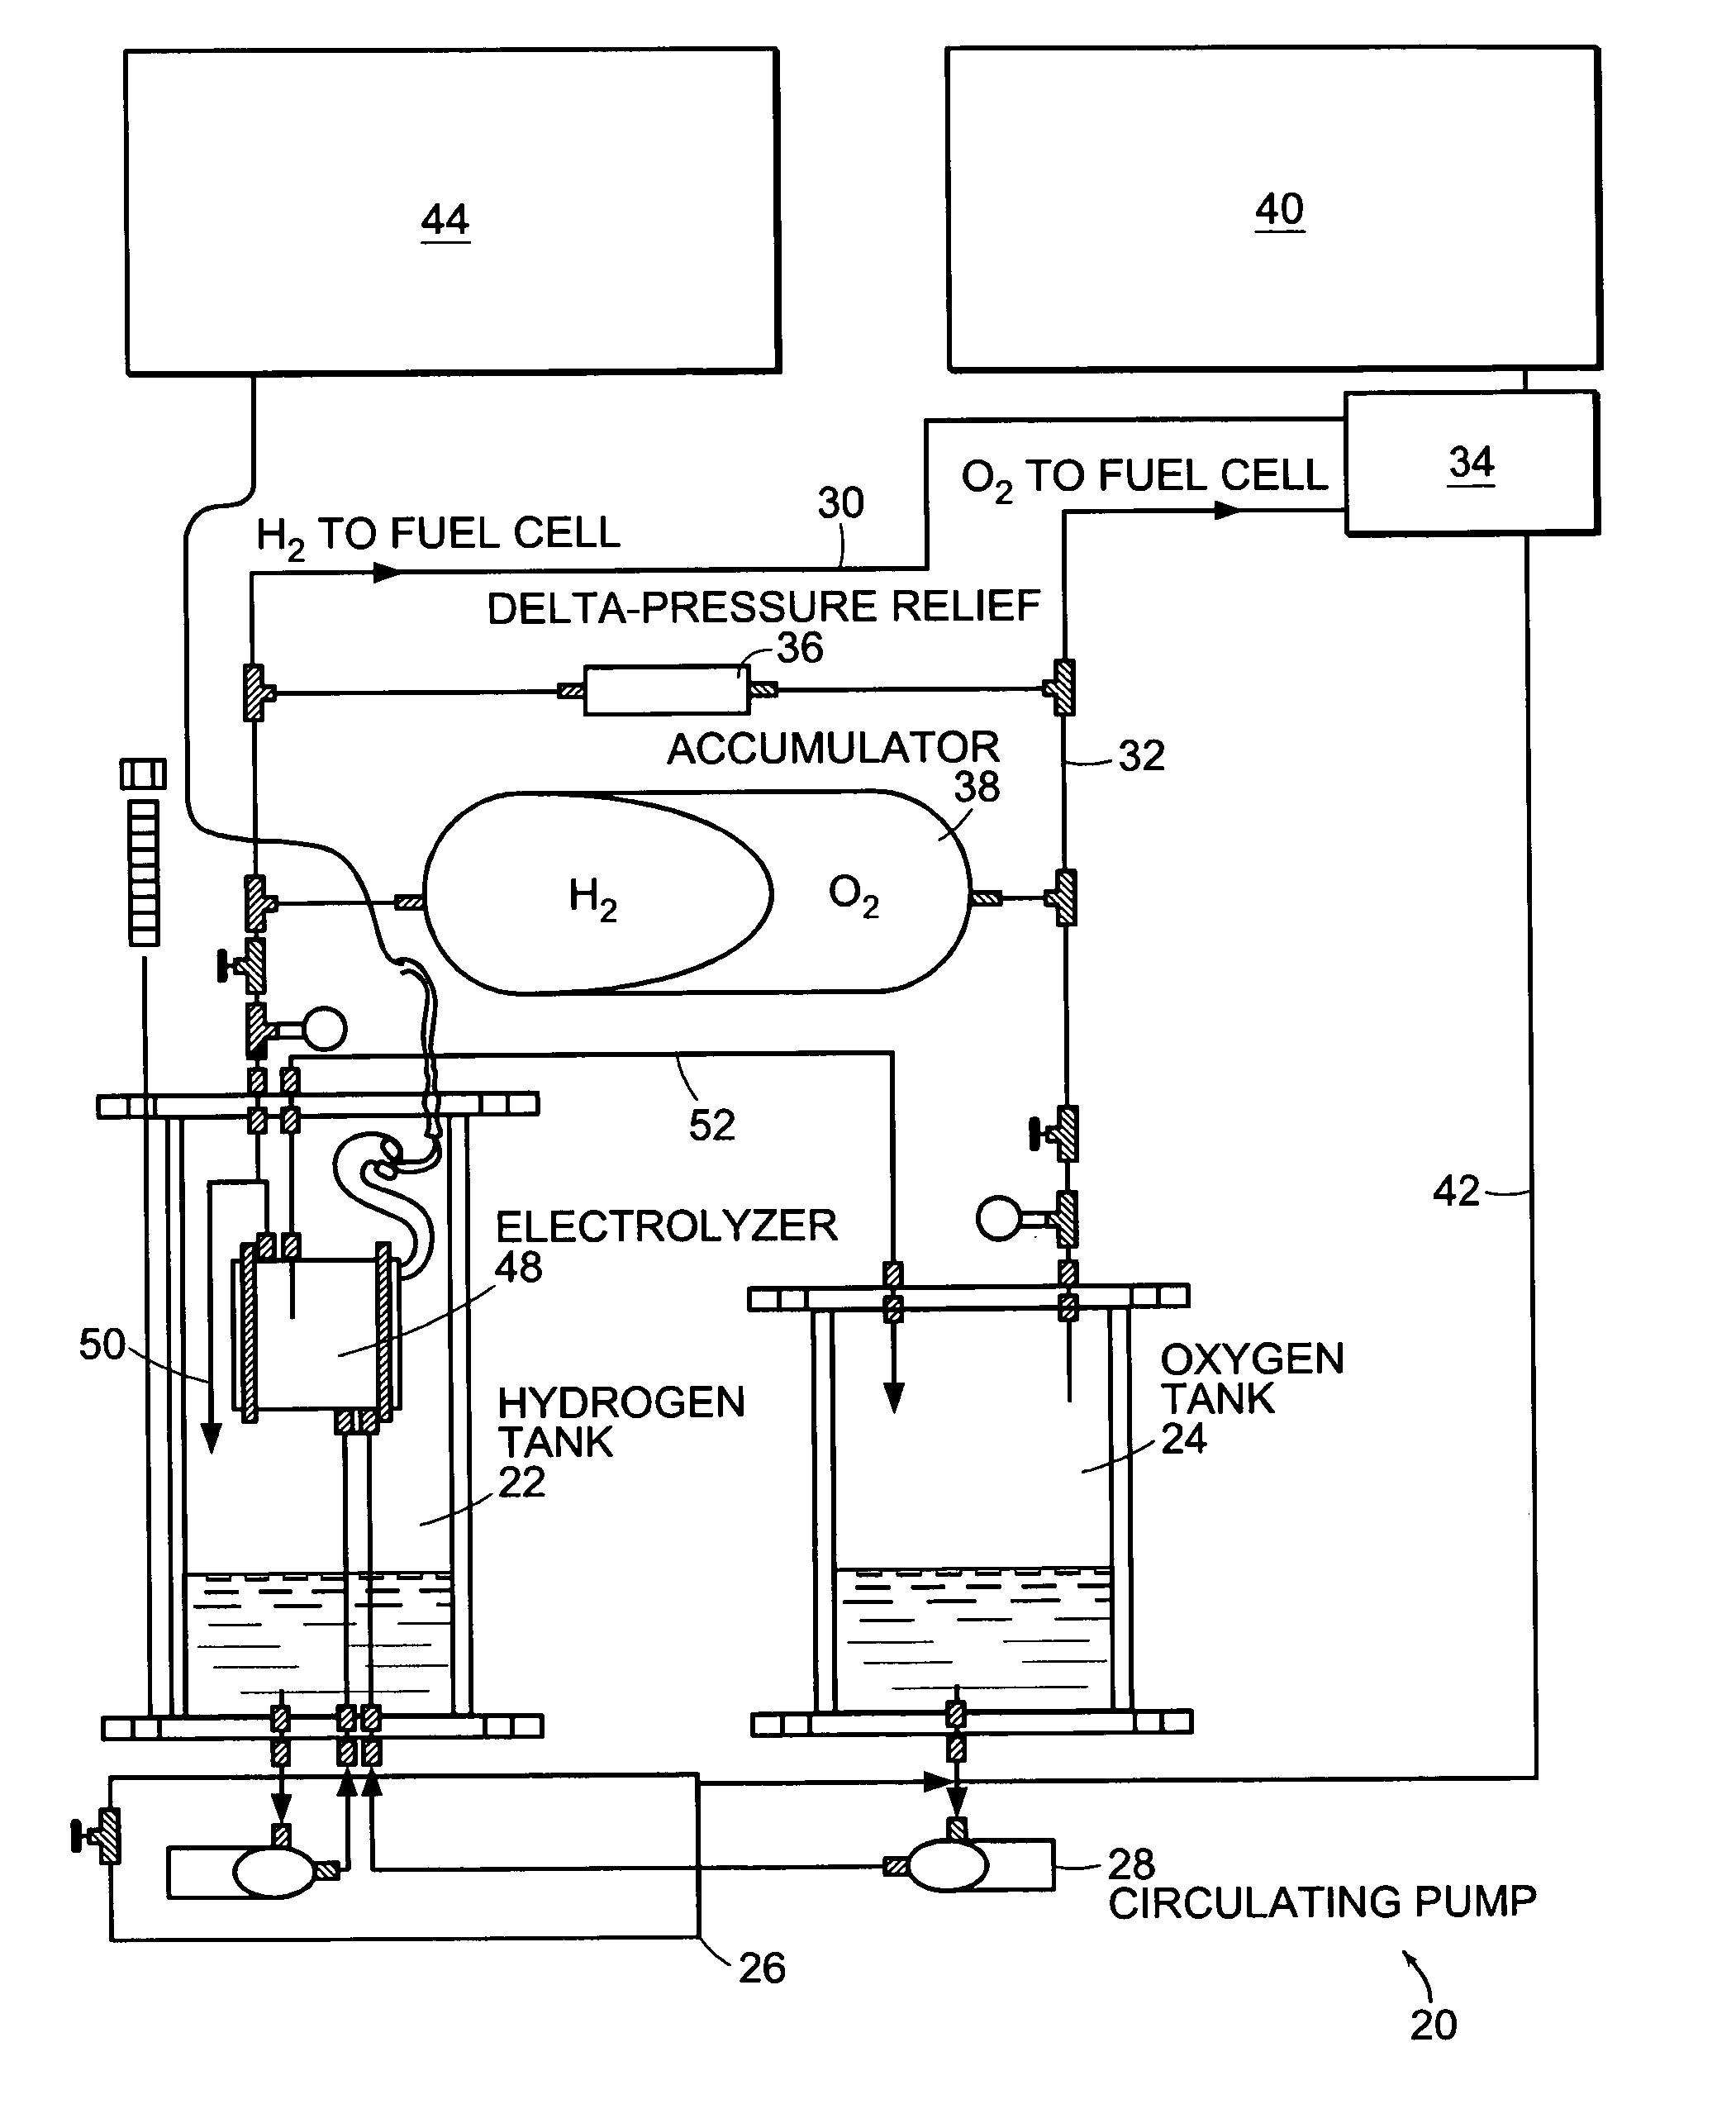 Electrolyzer pressure equalization system